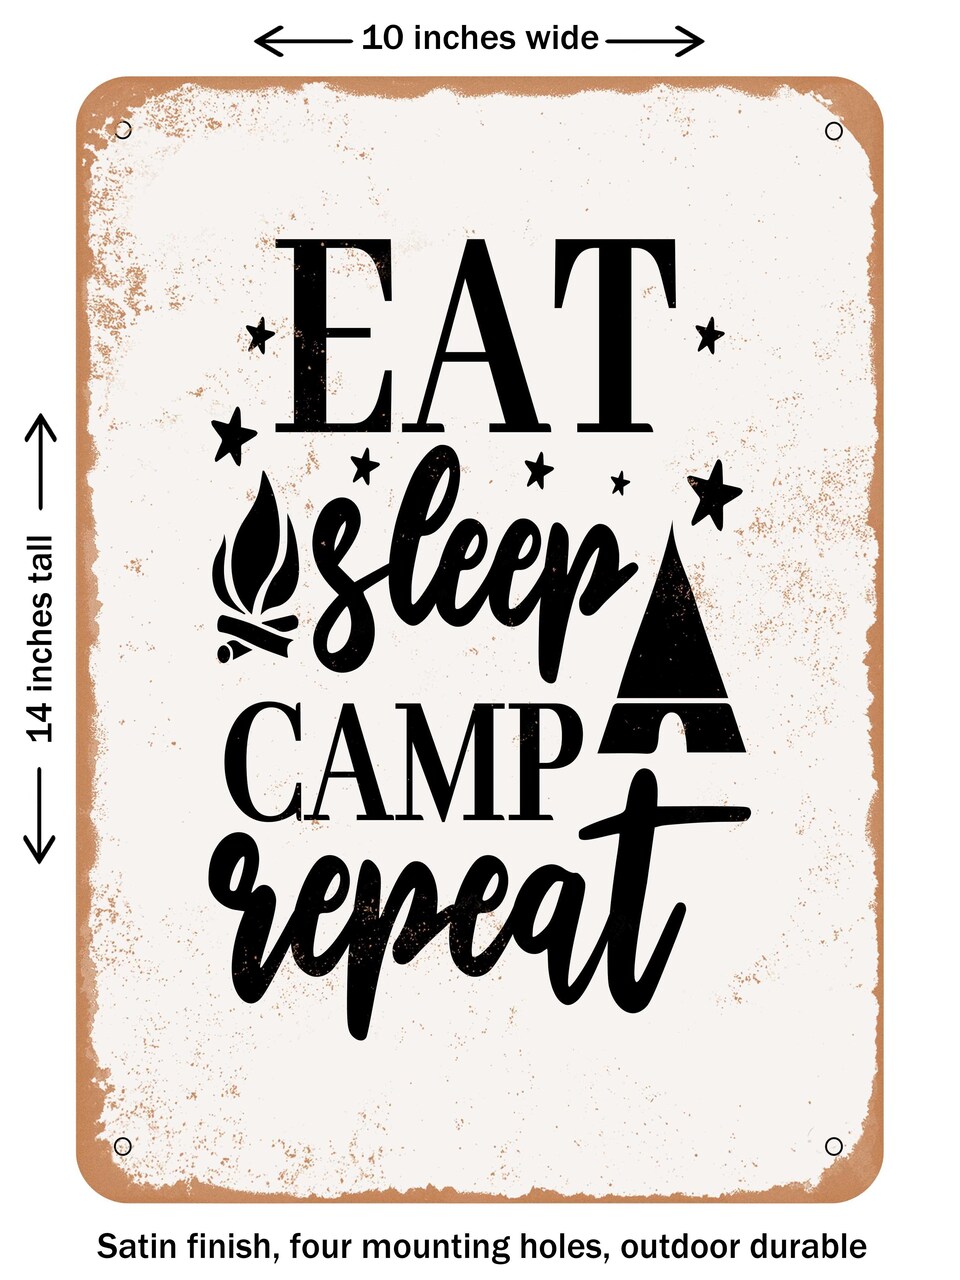 DECORATIVE METAL SIGN - Eat Sleep Camp Repeat - 3  - Vintage Rusty Look